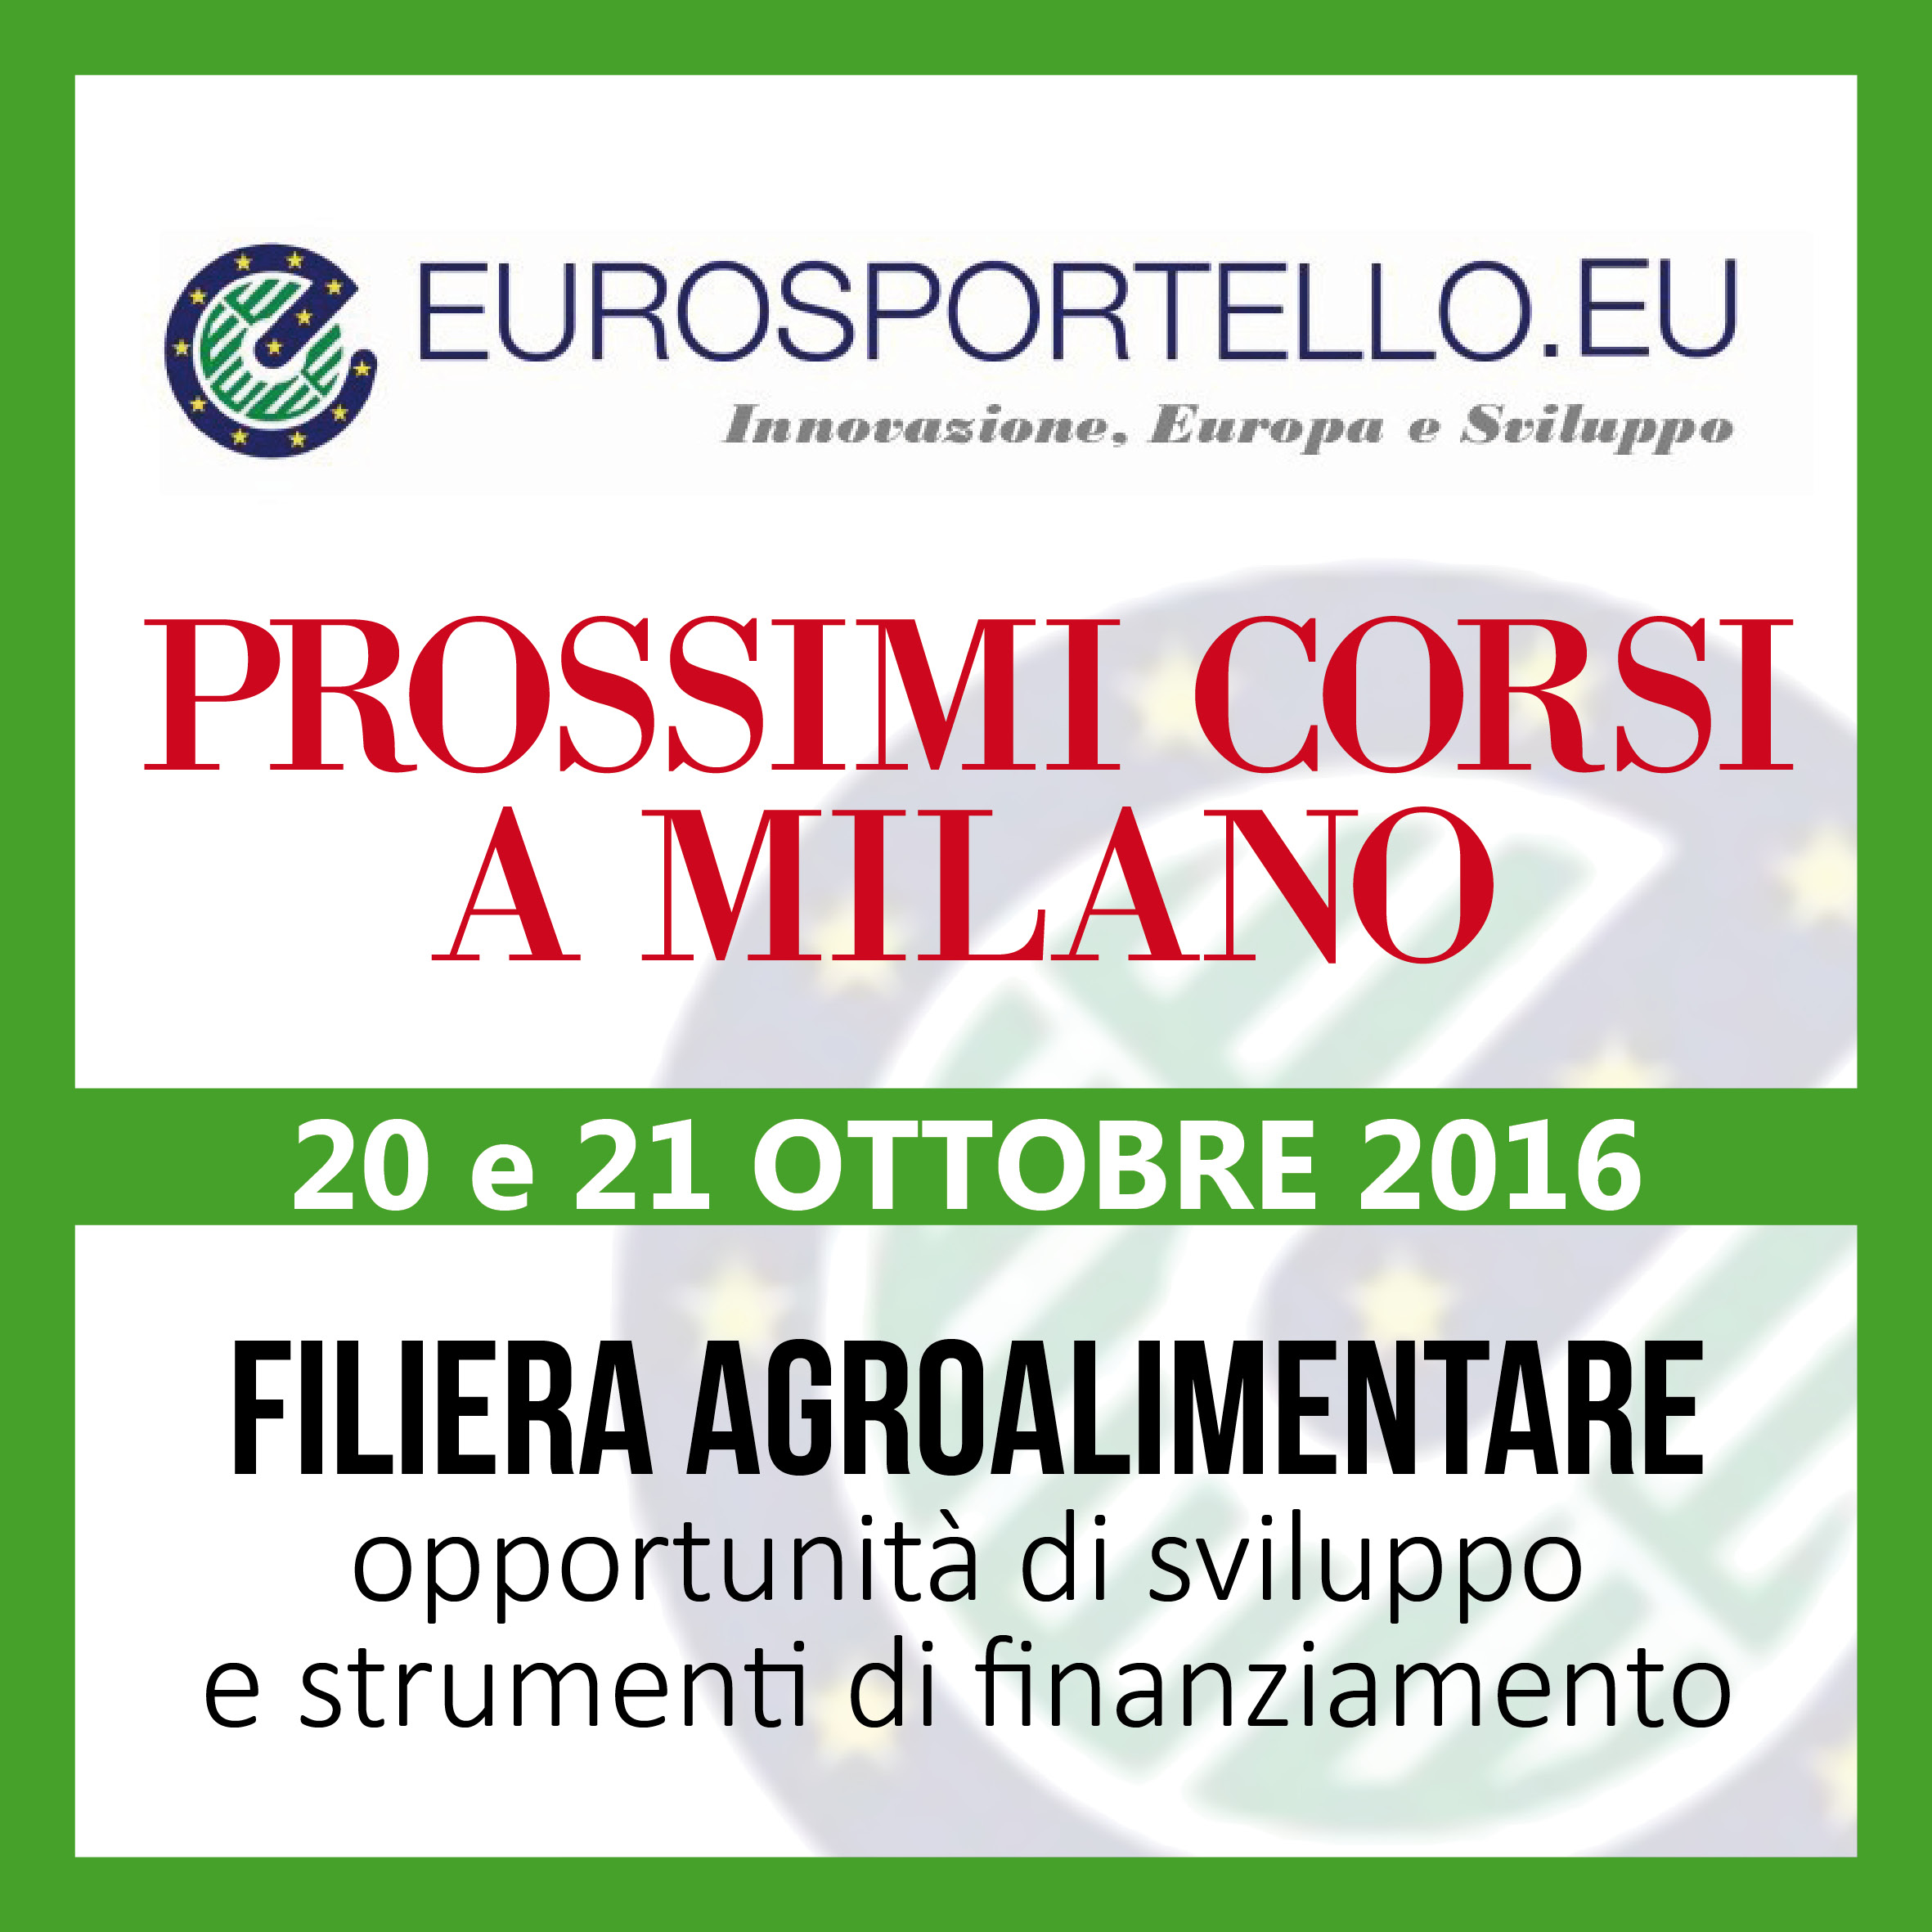 Eurosportello: nuovo corso a Milano sulla "Filiera Agroalimentare" 